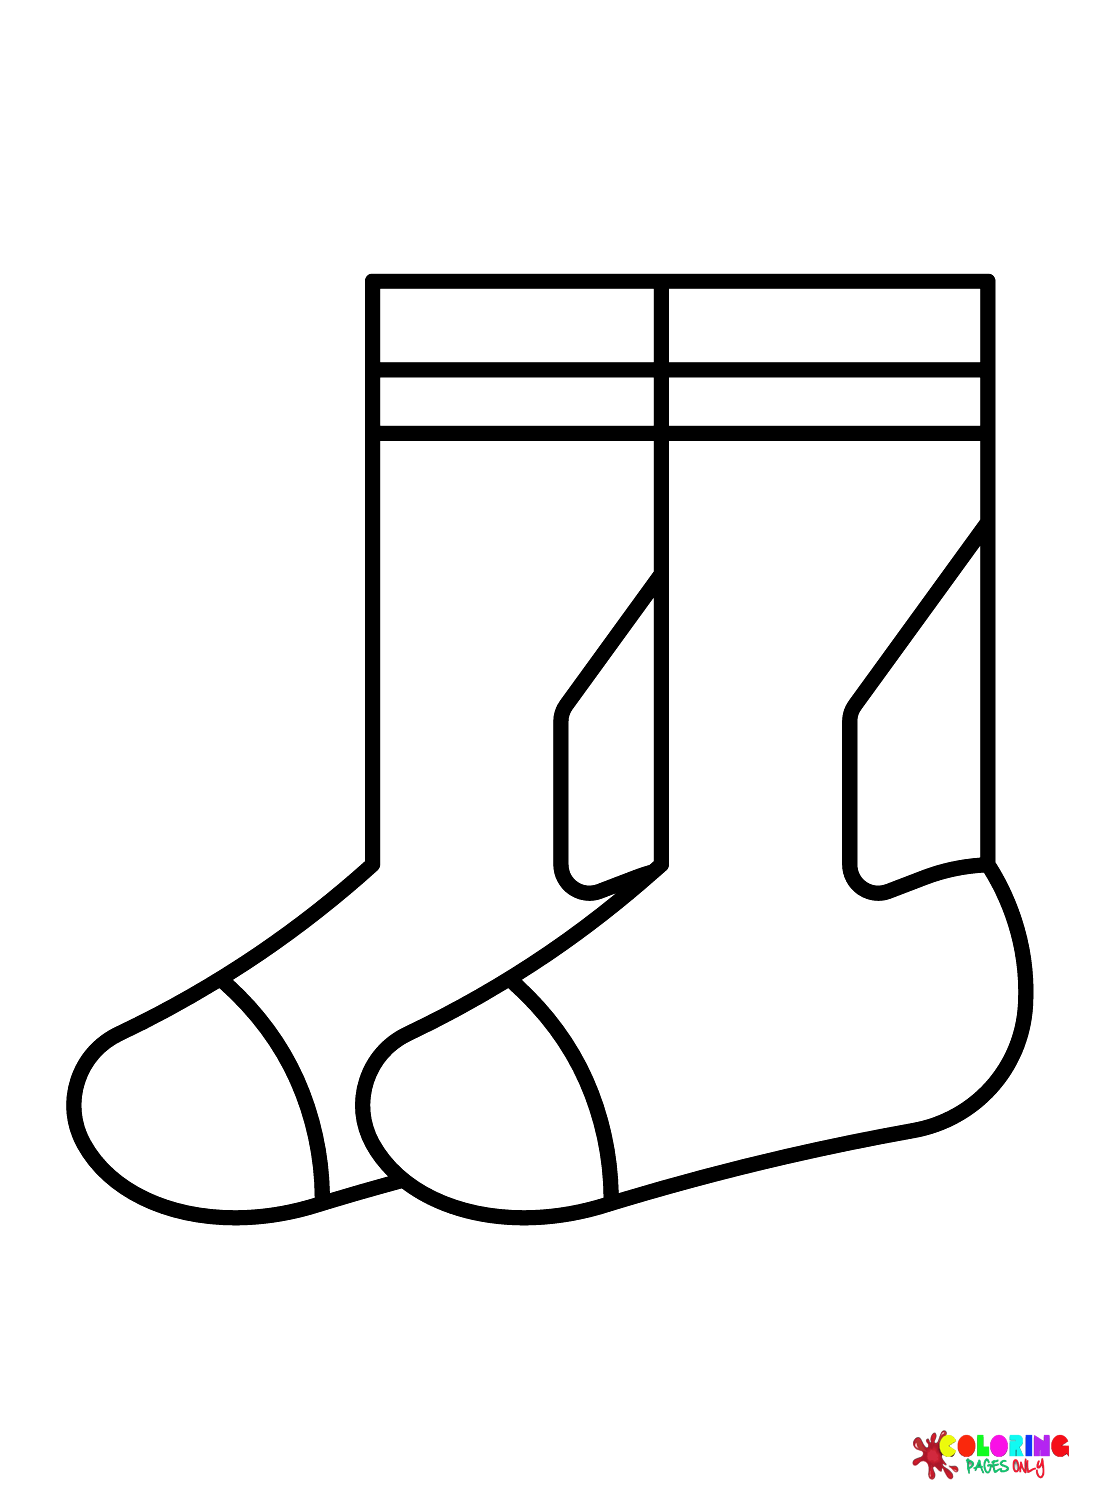 Socks Simple from Socks